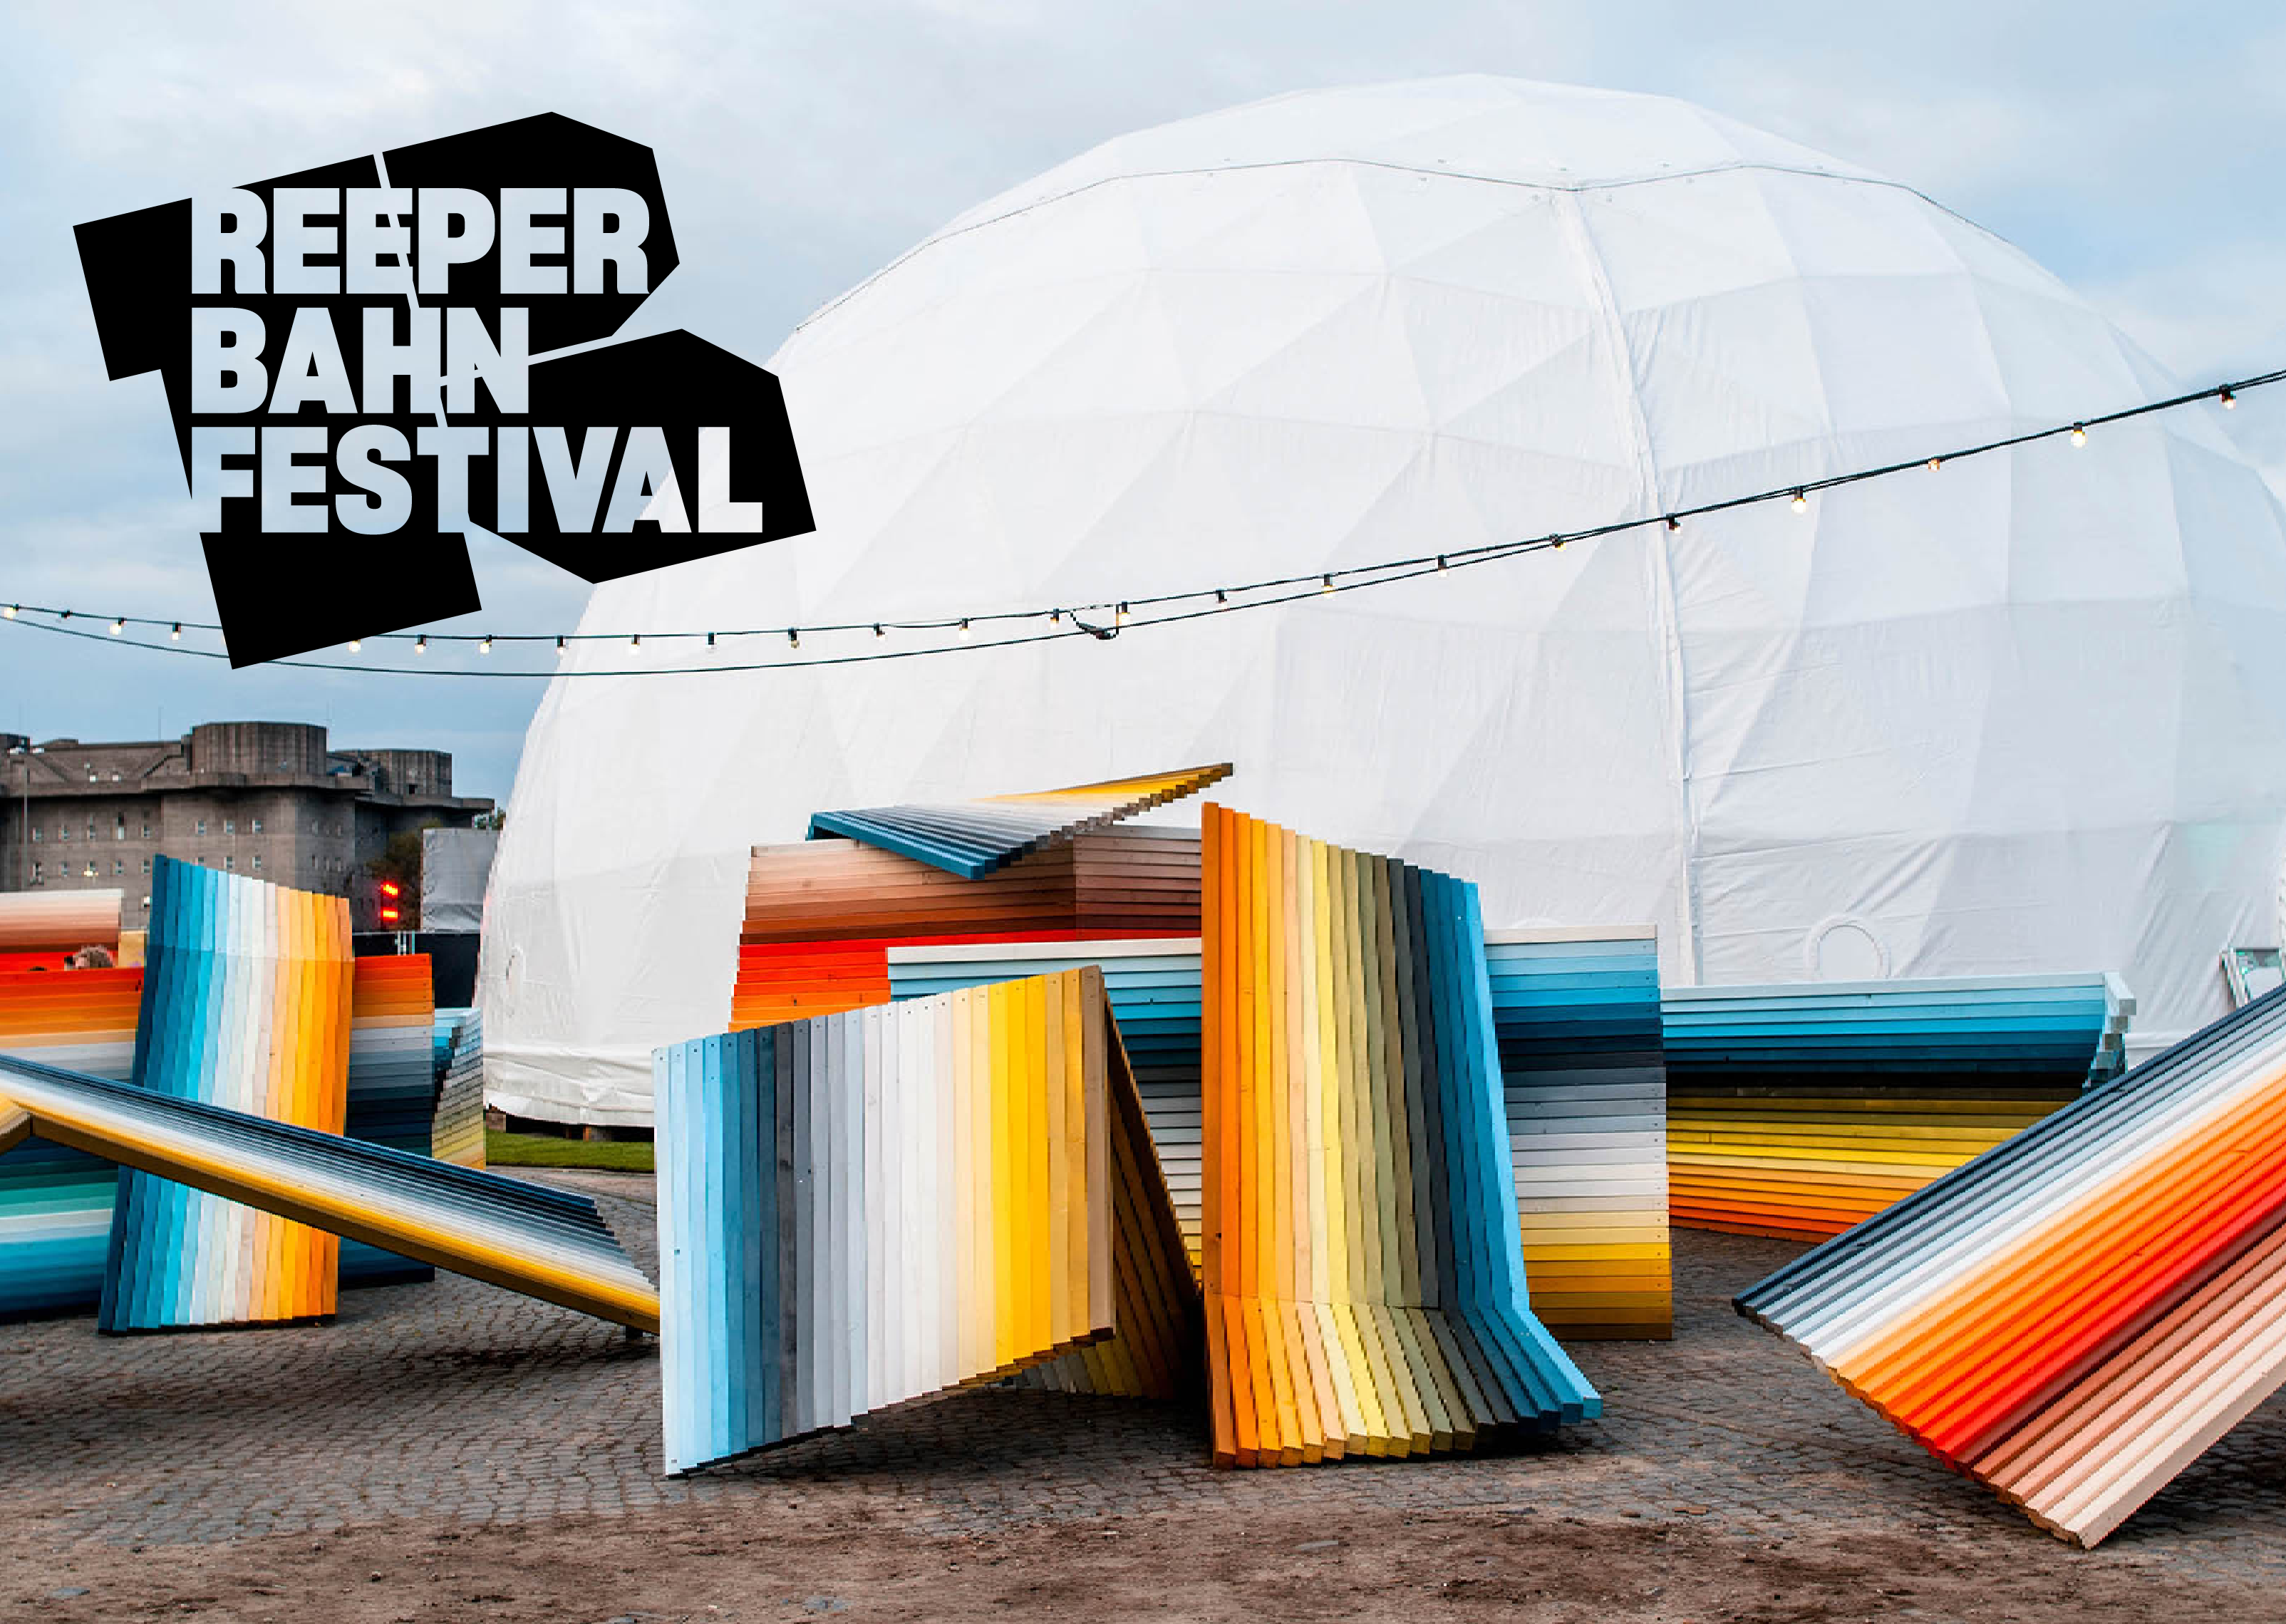 Reeperbahn Festival 2020: the first corona-proof festival?